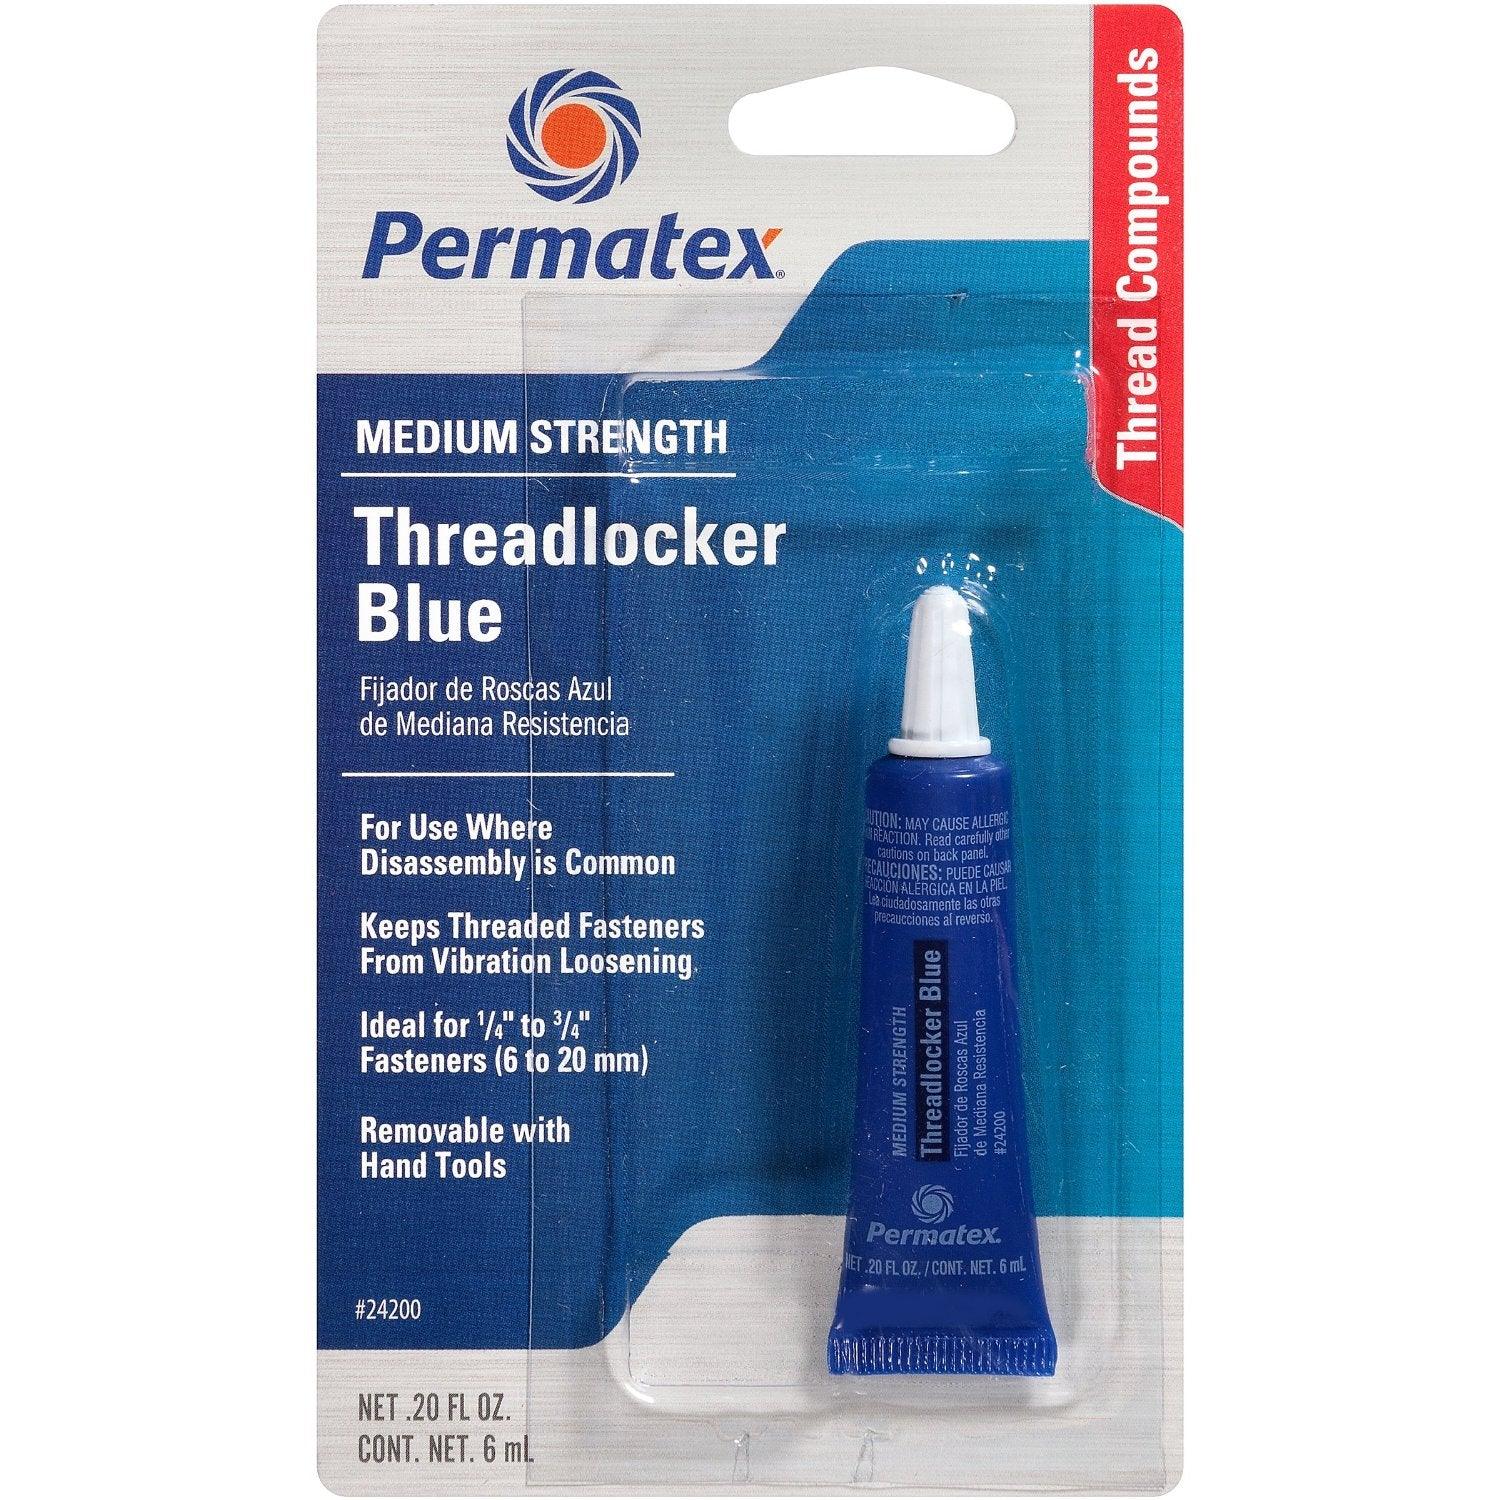 Threadlocker Blue by Permatex for Triumph Motorcycles